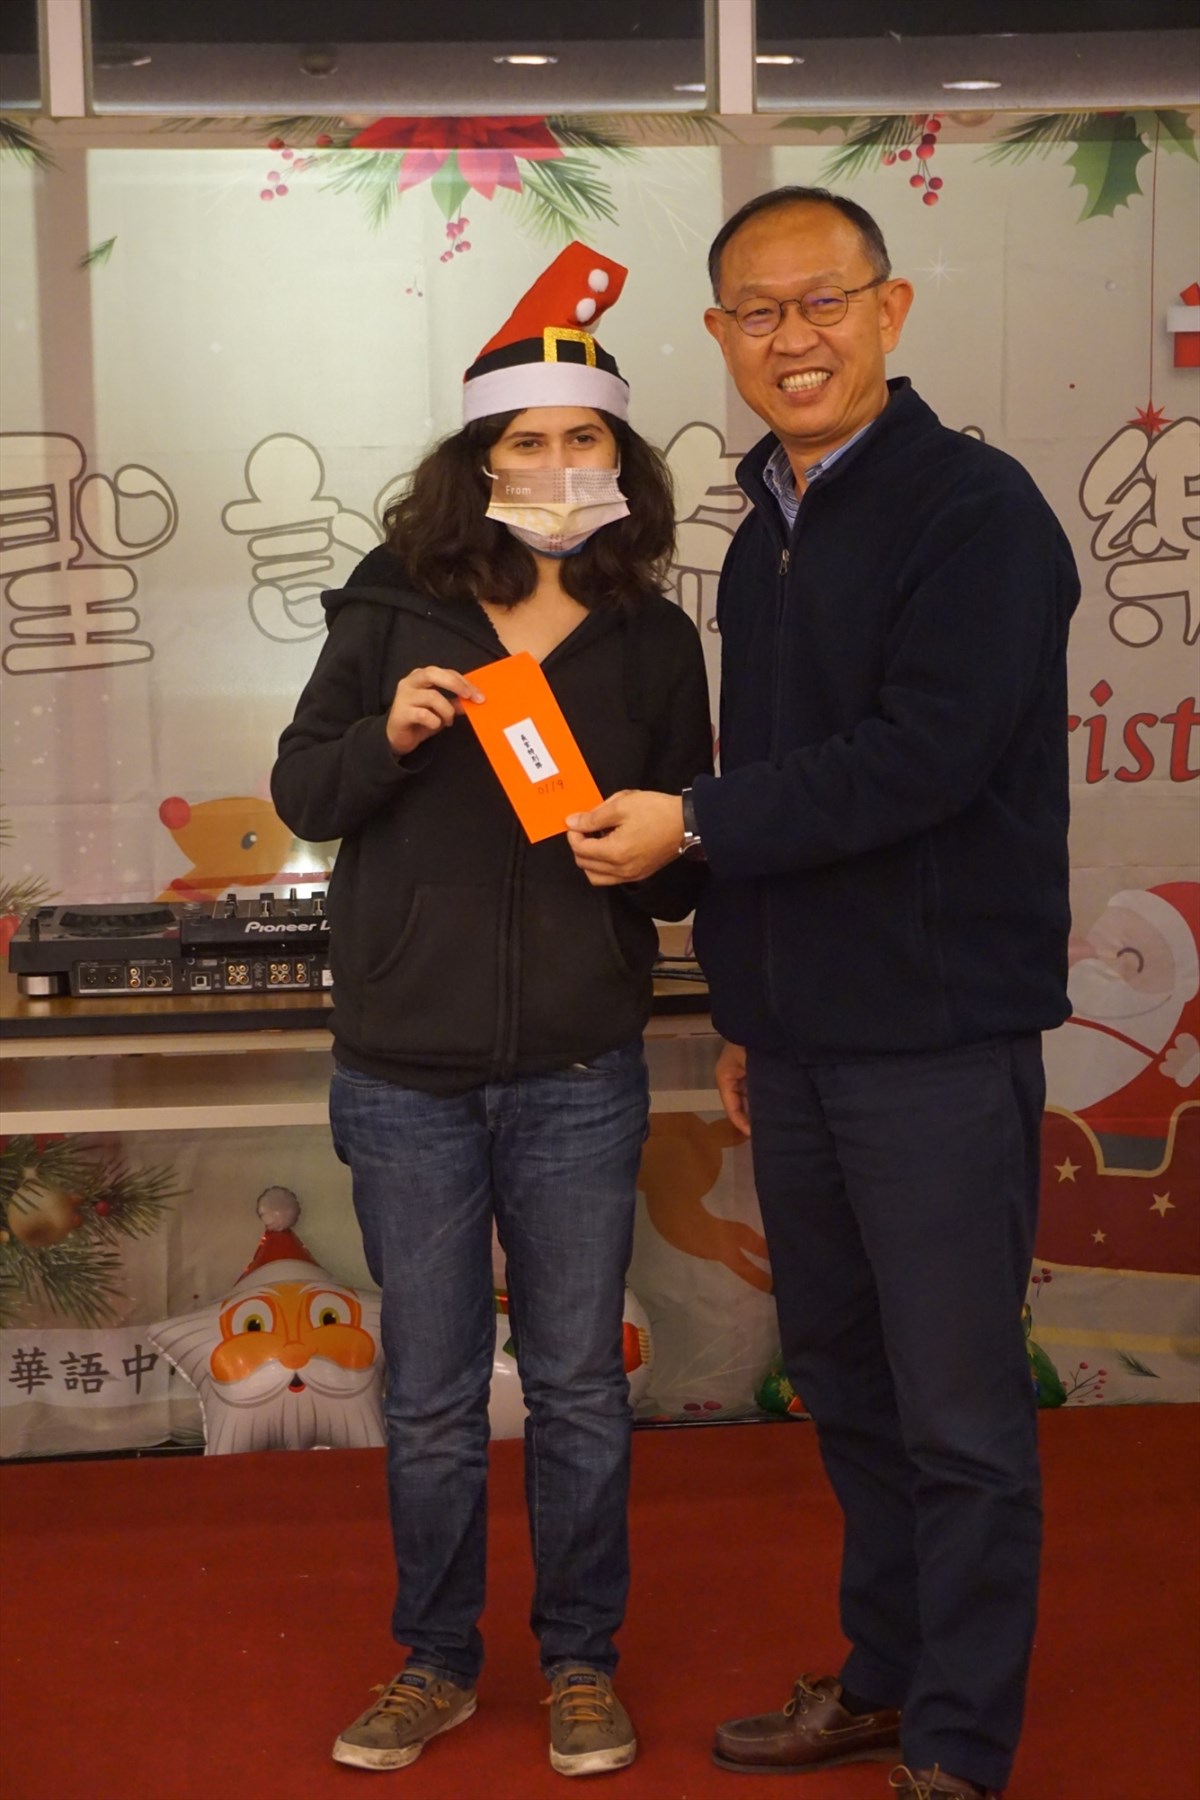 06.KSU Chinese Language Center Holds Christmas Party for Regular Chinese Classes International Students